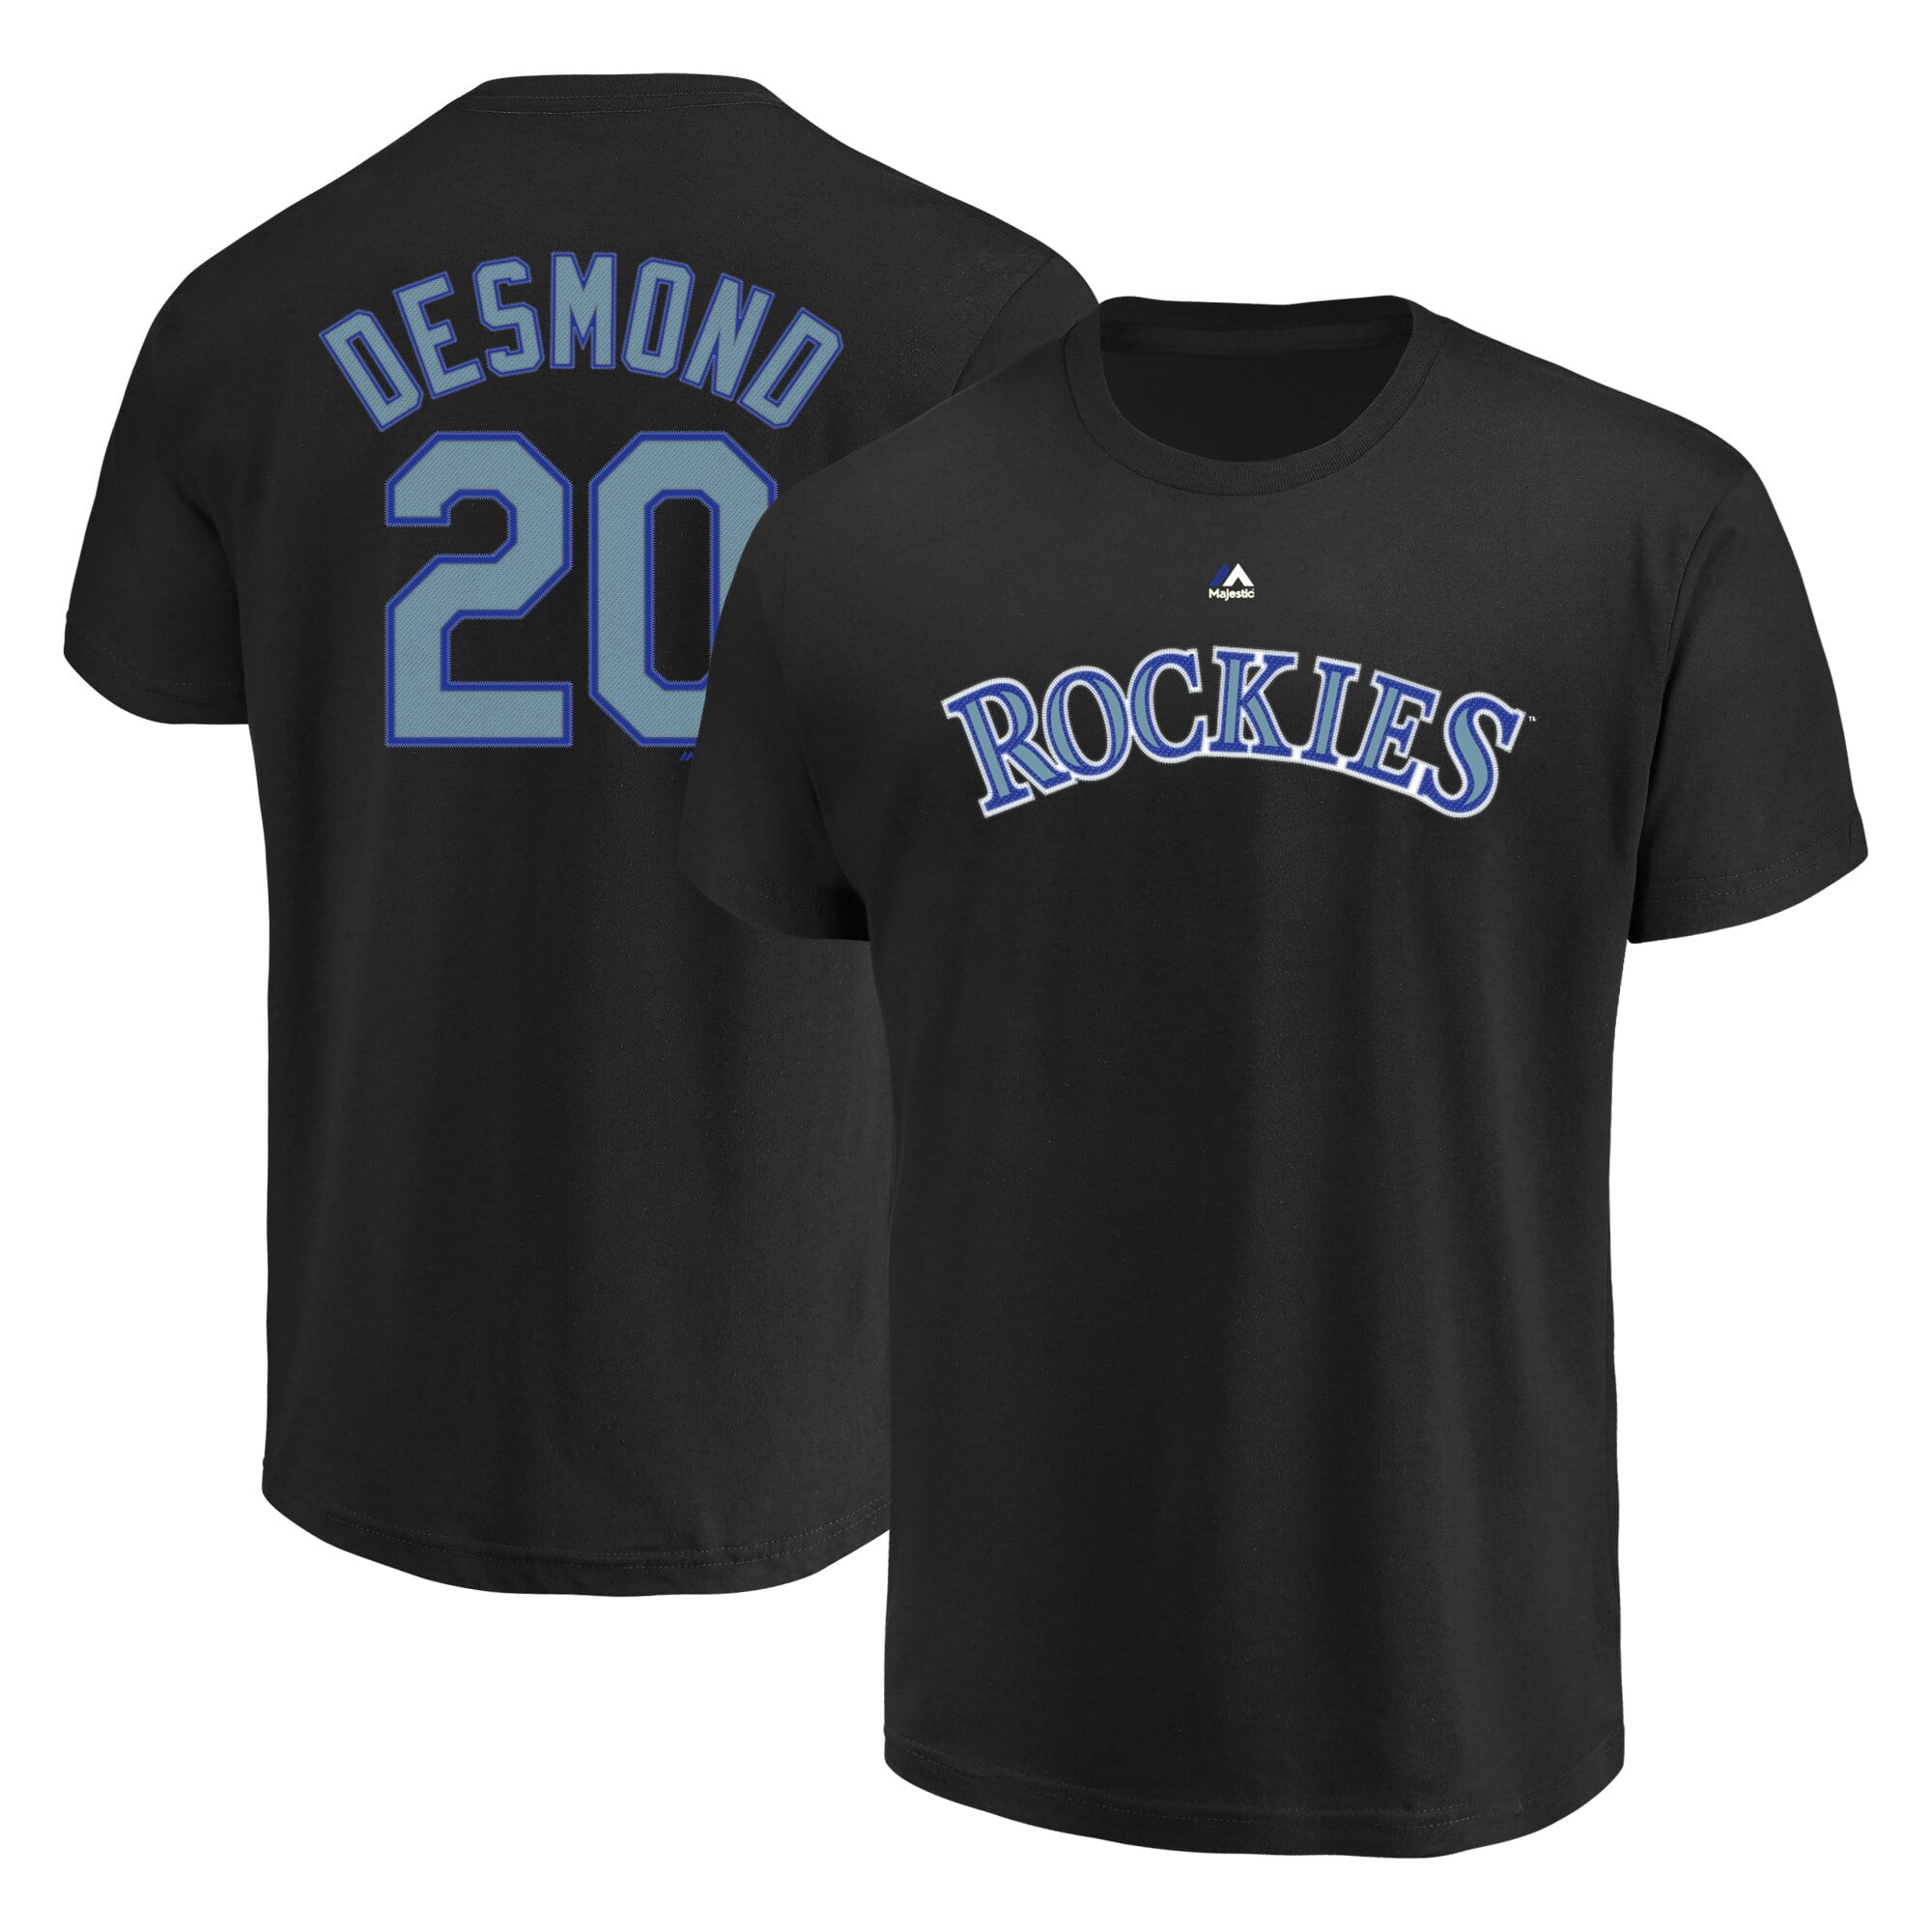 Rockies Baseball Mascot Dinger KIDS T Shirt